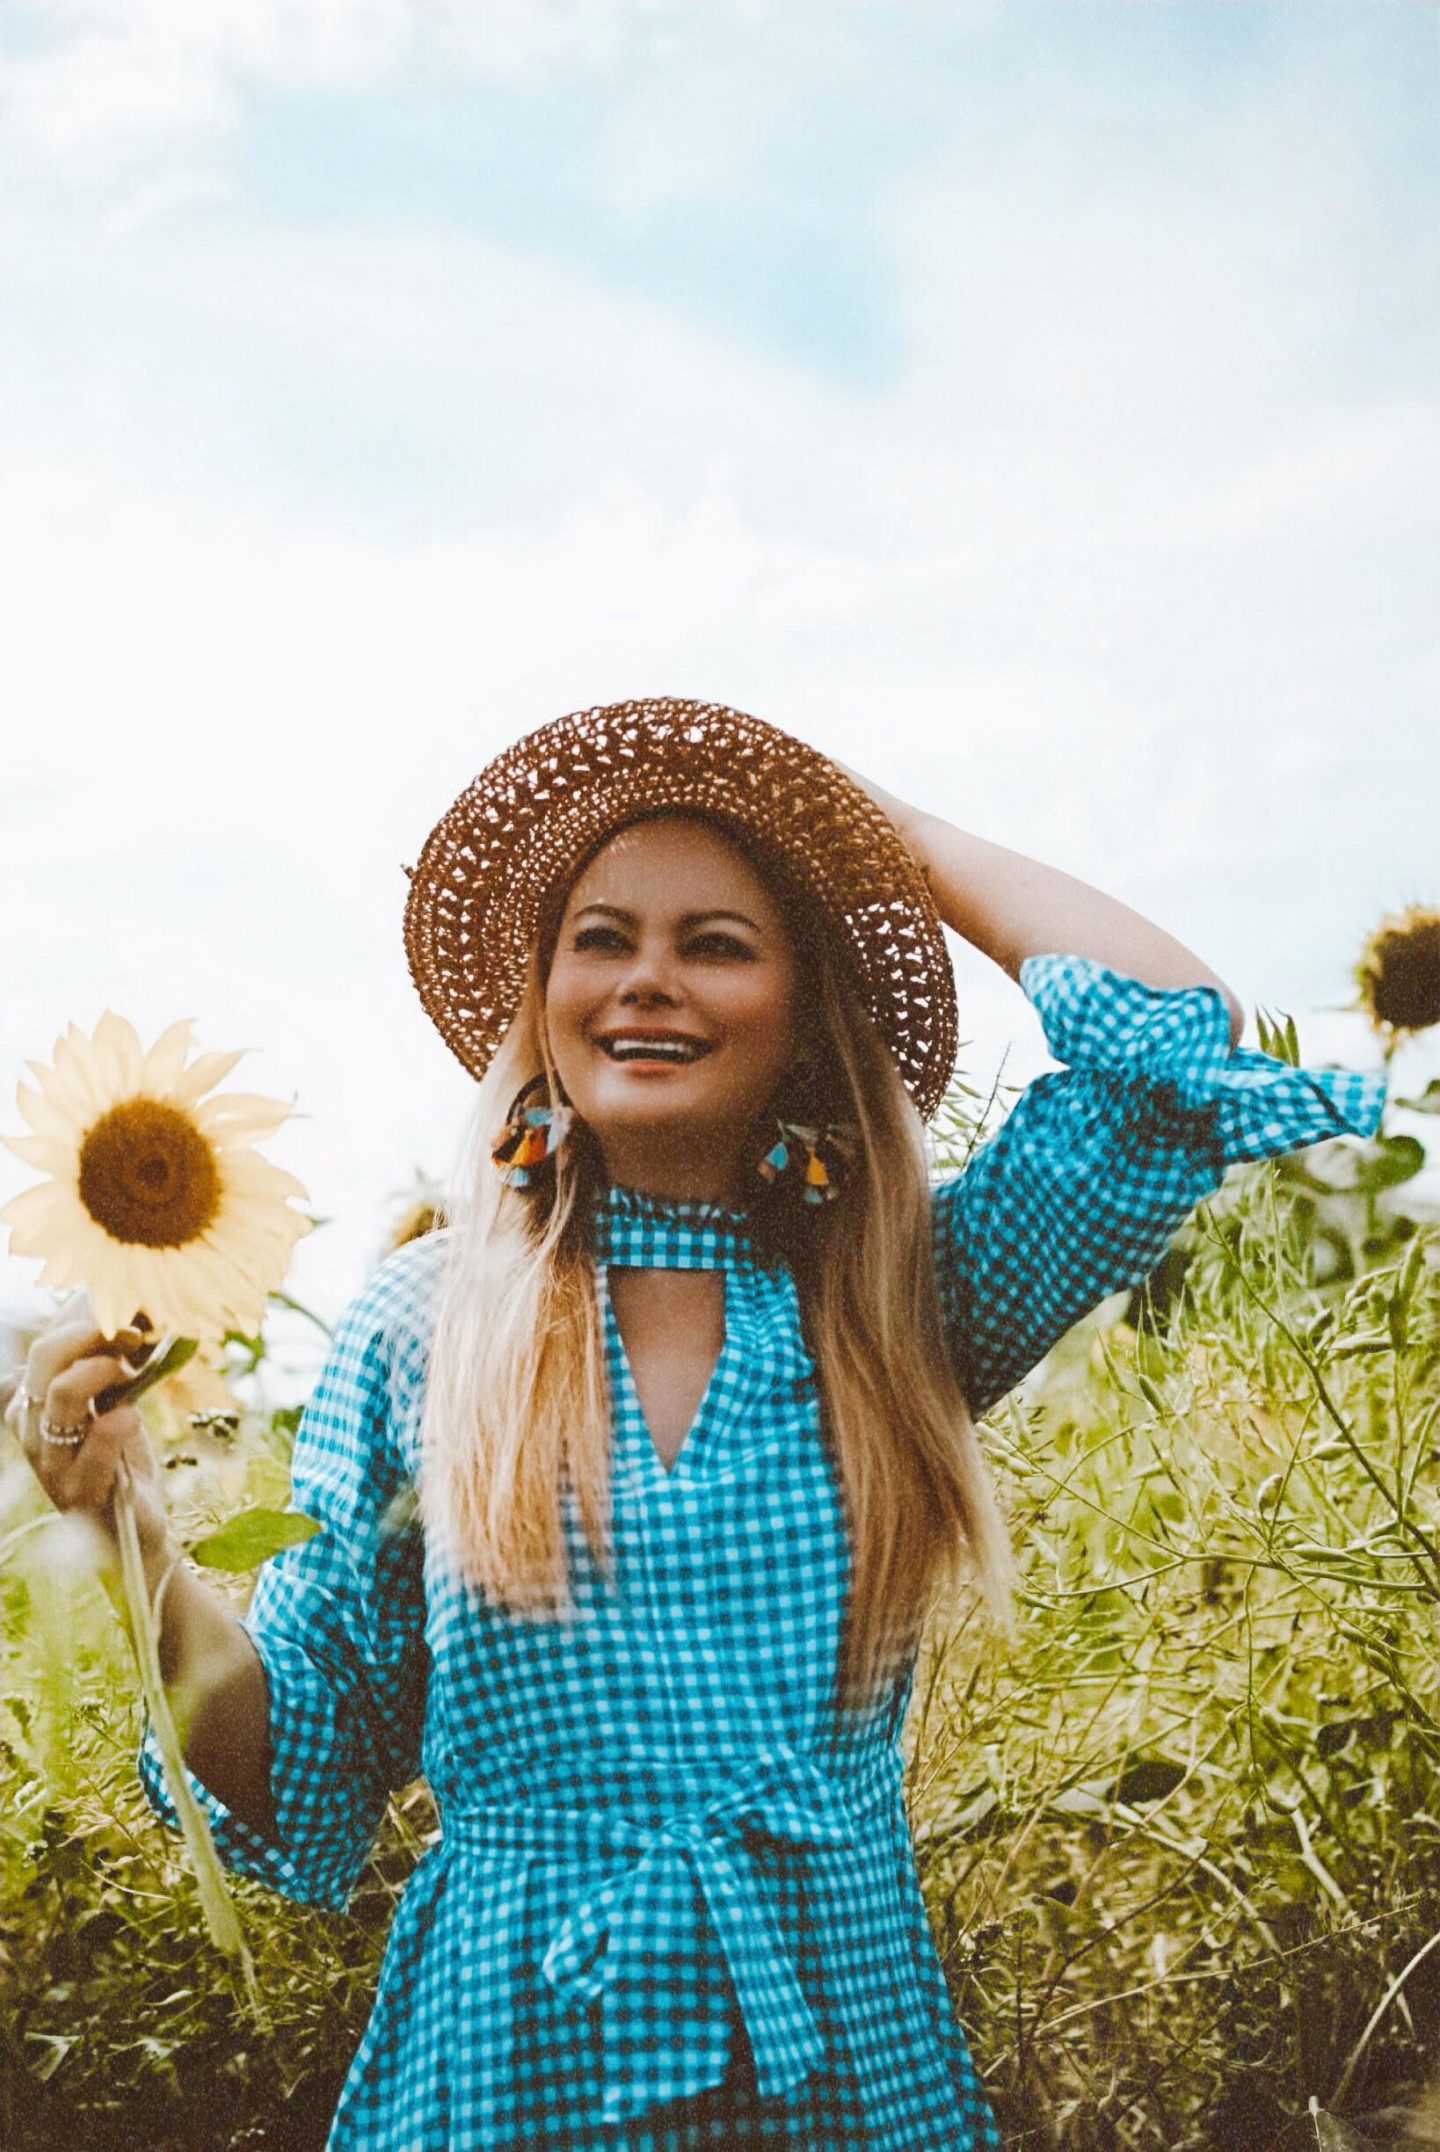 Sunflower-field-vanessa-lambert-summer-happiness-whatwouldvwear